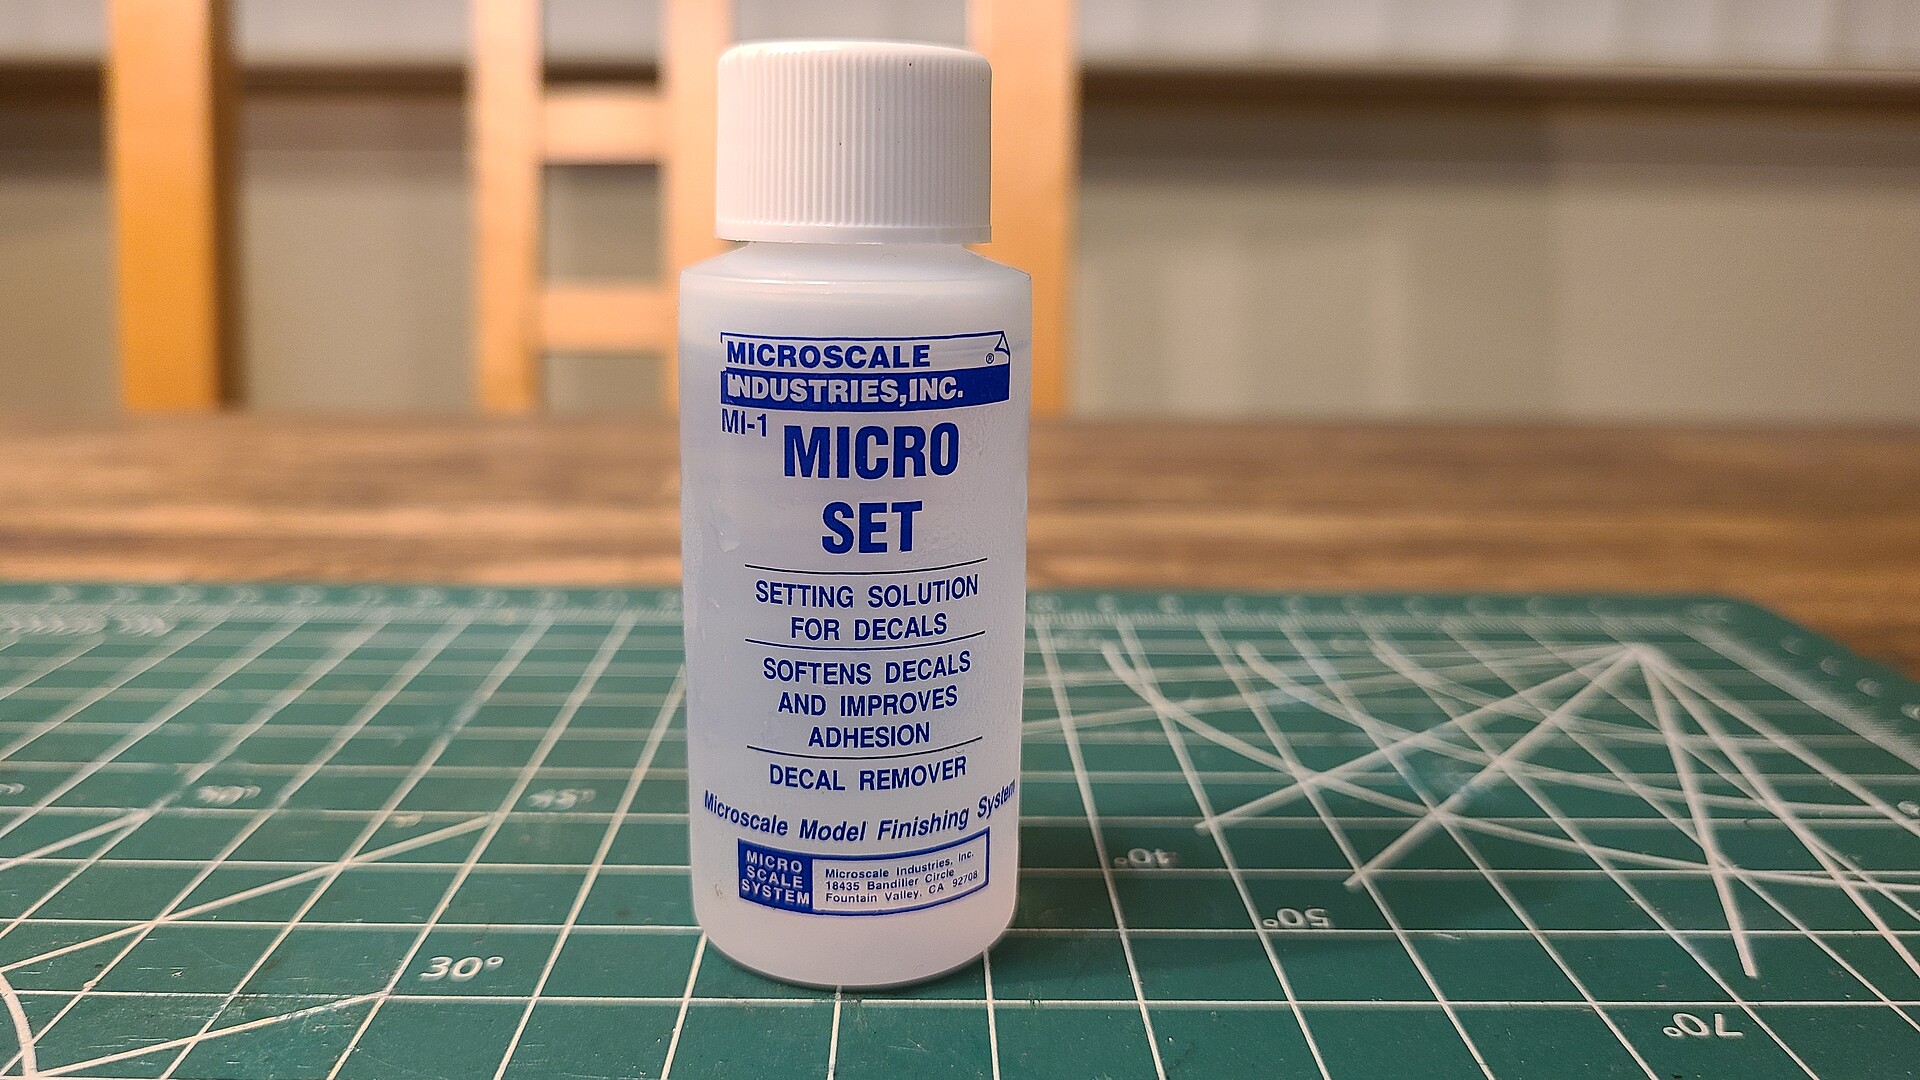 Micro Sol 1 oz bottle (Decal Setting Solution) MI-2